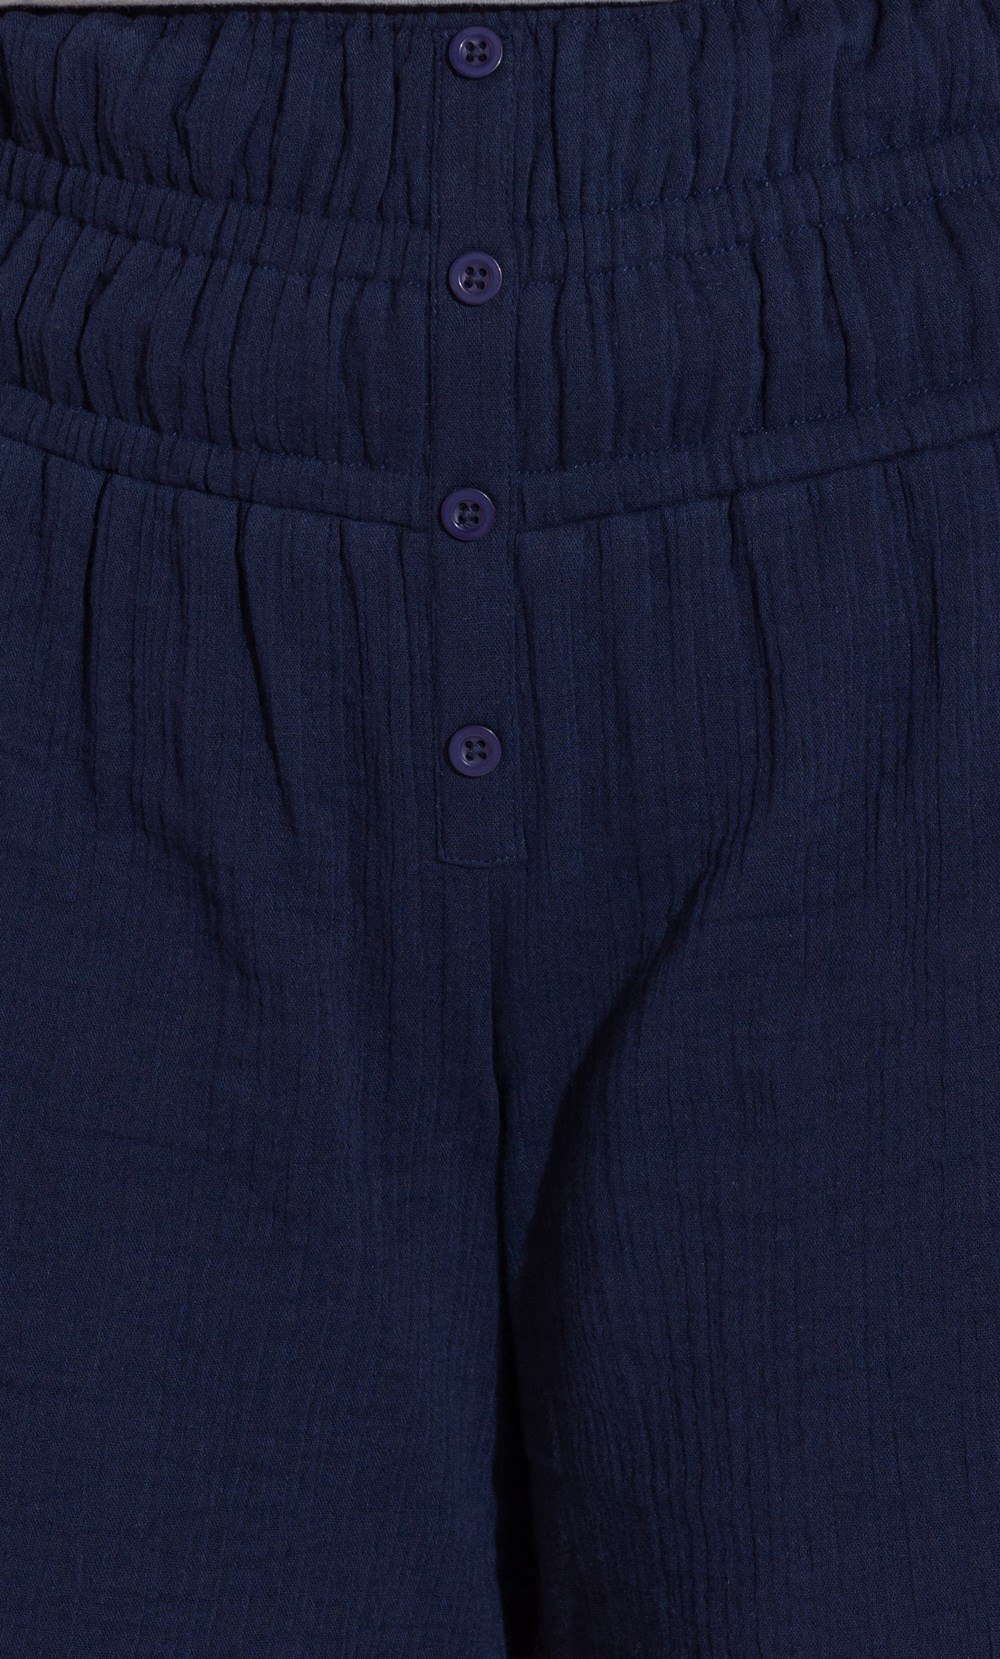 Pull On Textured Cotton Shorts